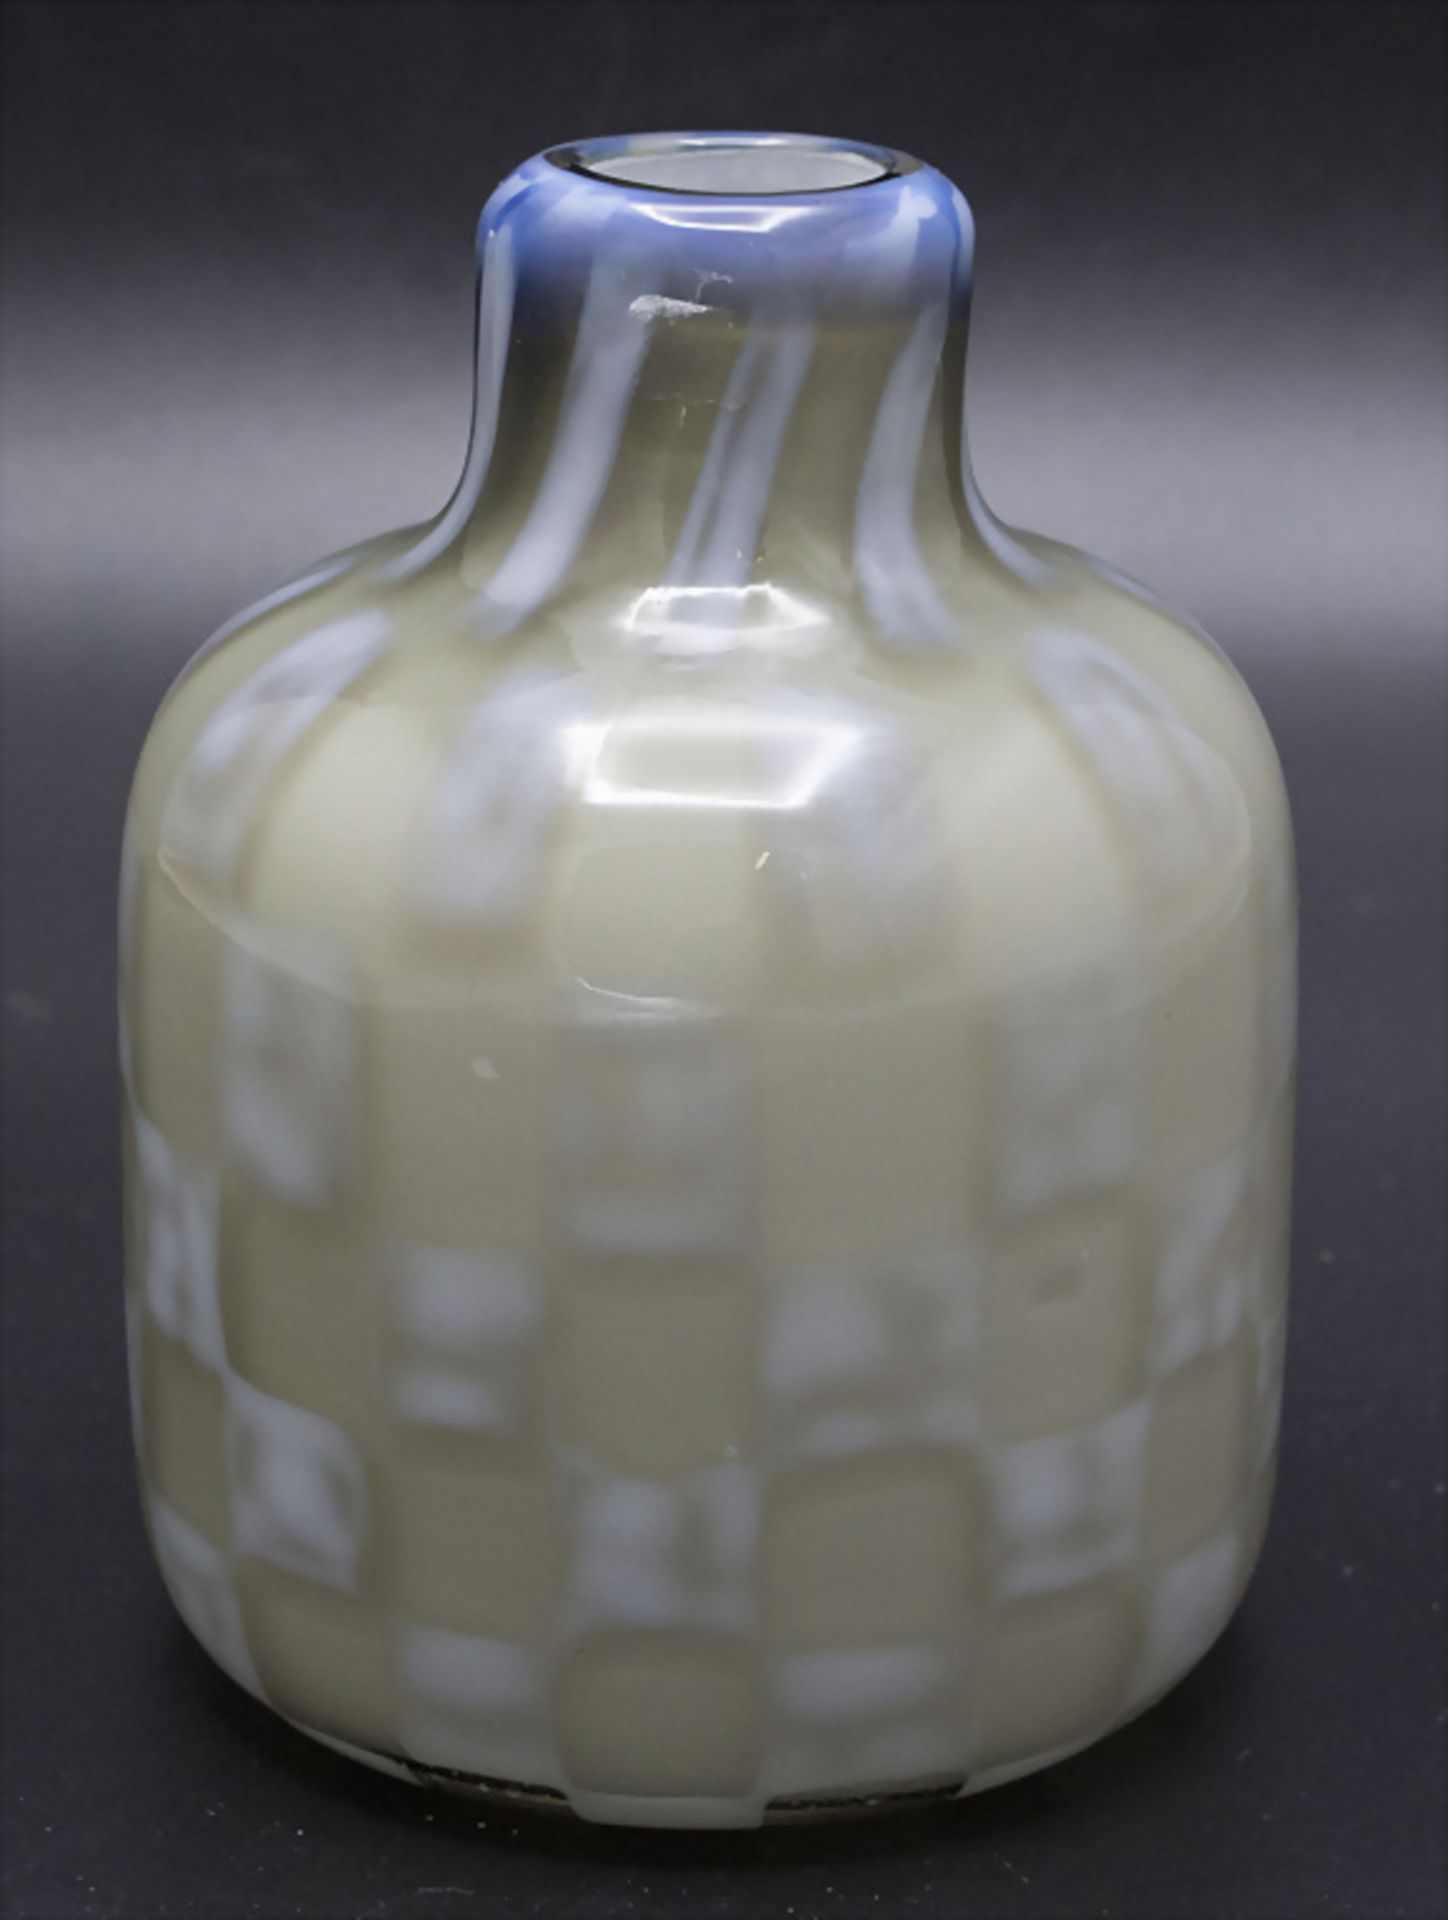 Vase / A glass vase, wohl Barovier und Toso, Murano, 70/80er Jahre - Image 2 of 4